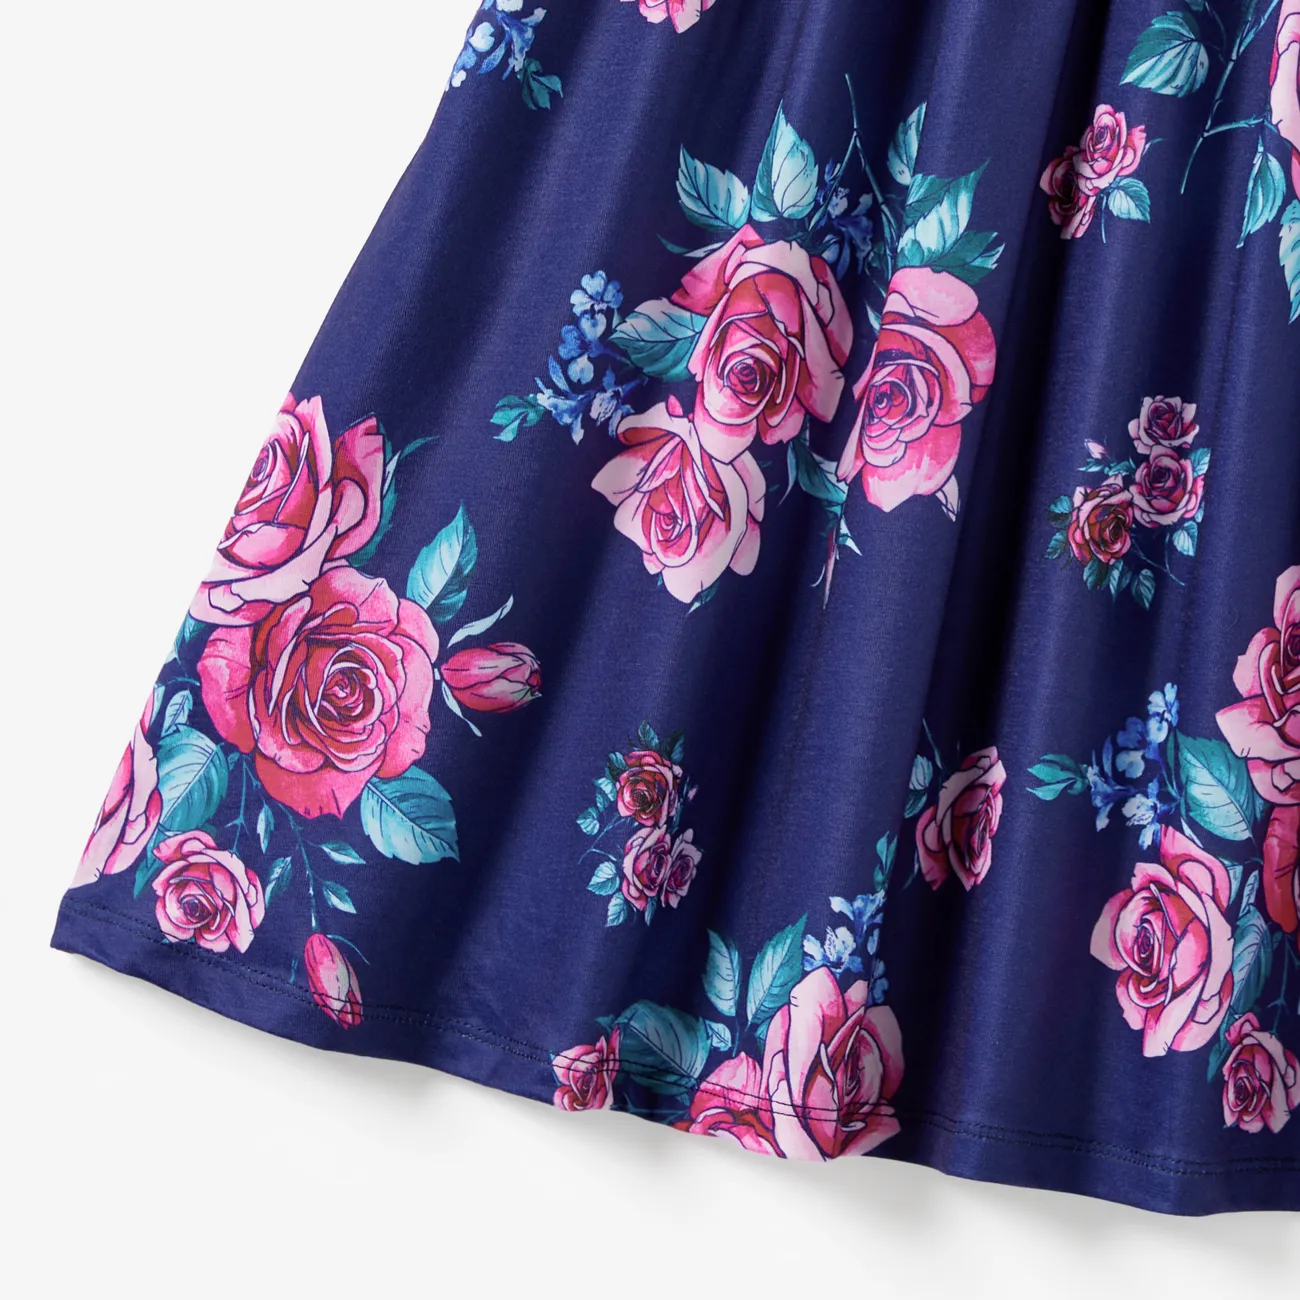 Mommy and Me Floral Tank Top Elastic Waist Maxi Dresses with Pockets bluishviolet big image 1